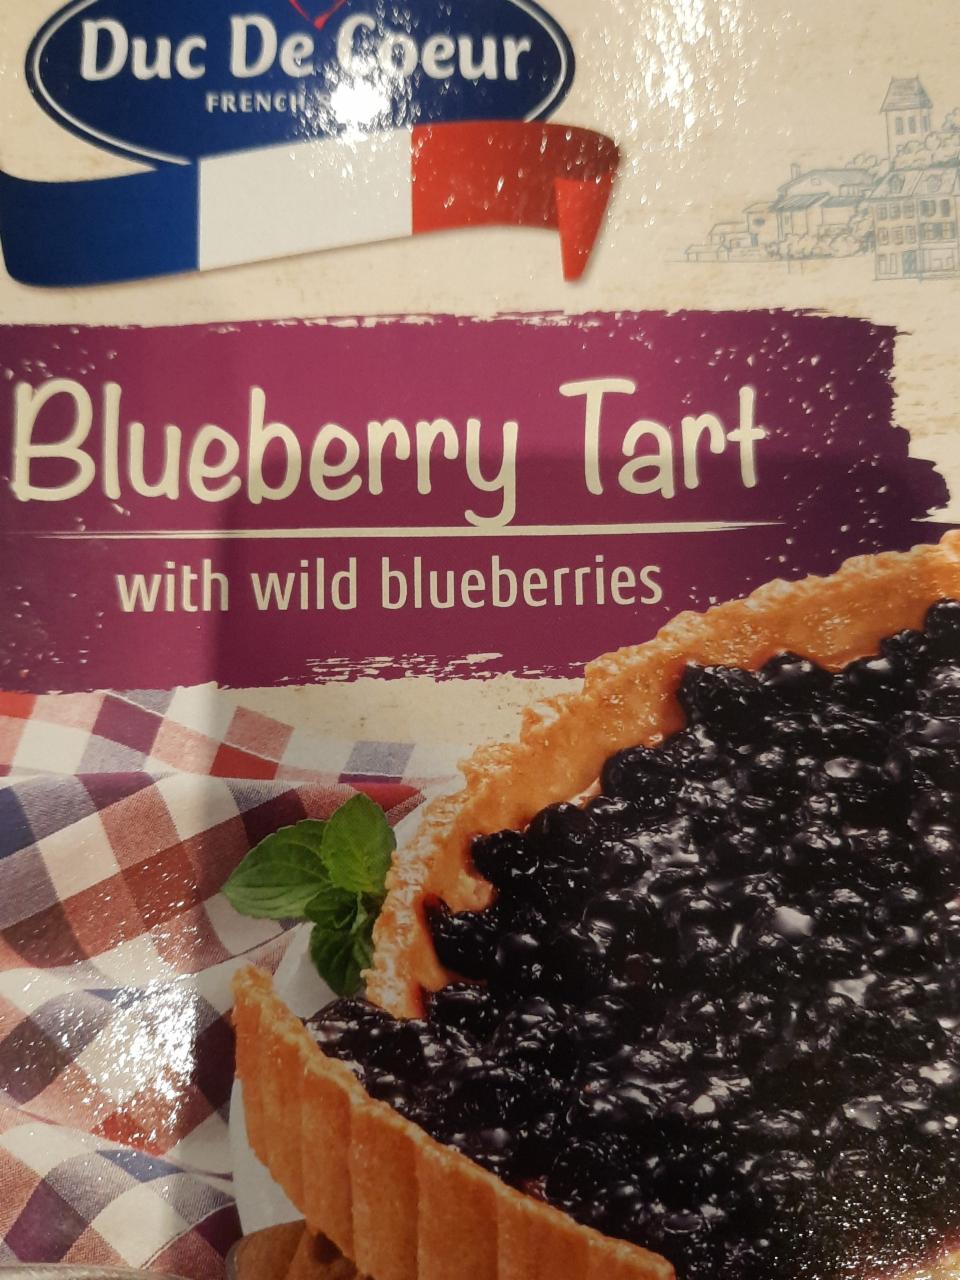 Fotografie - Blueberry Tart with wild blueberries Duc De Coeur